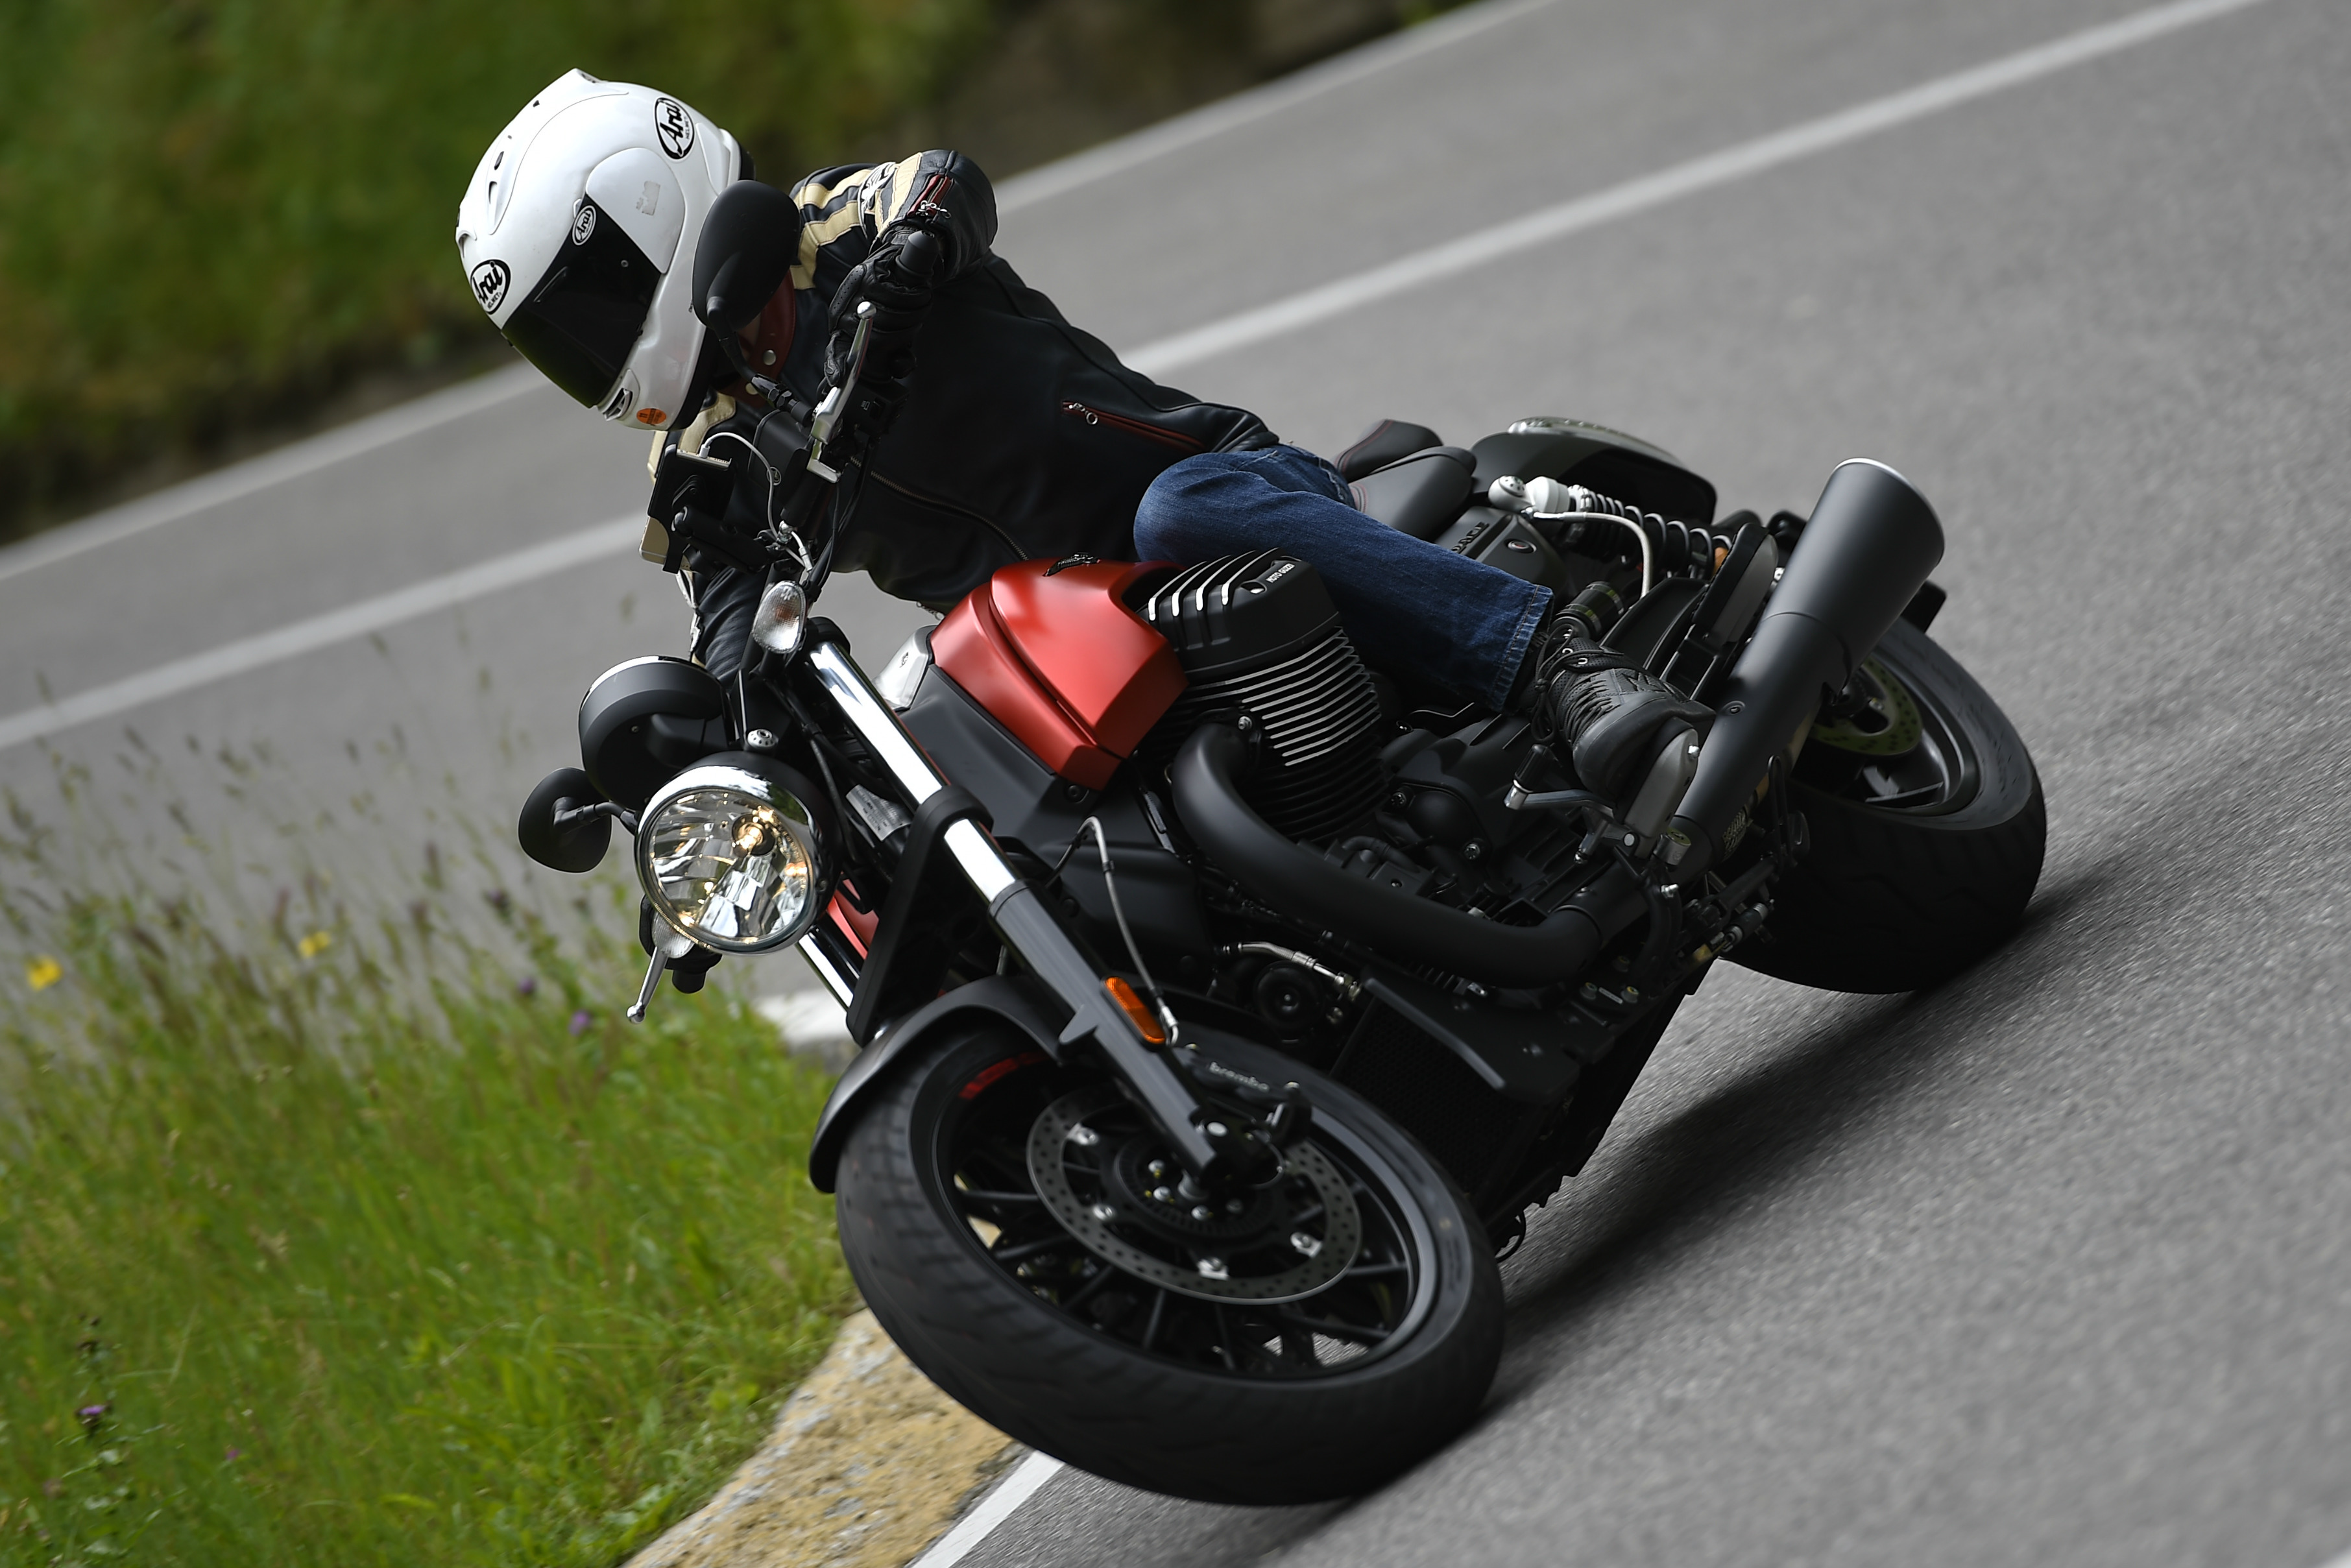 First ride: Moto Guzzi Audace review